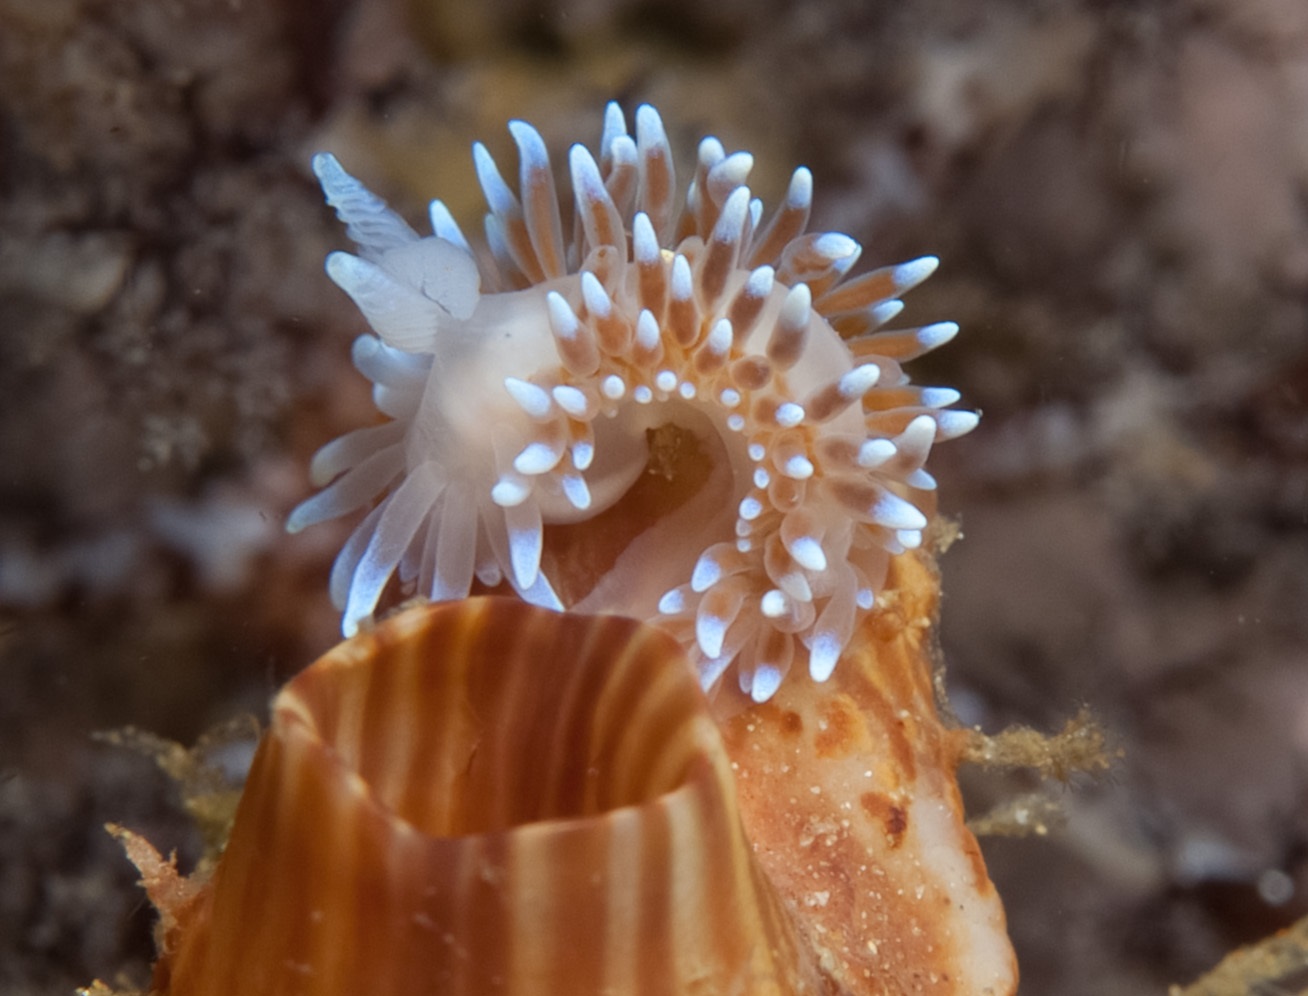 Sunfish, sharks, sea slugs: Global marine superstar helps protect False Bay's special species